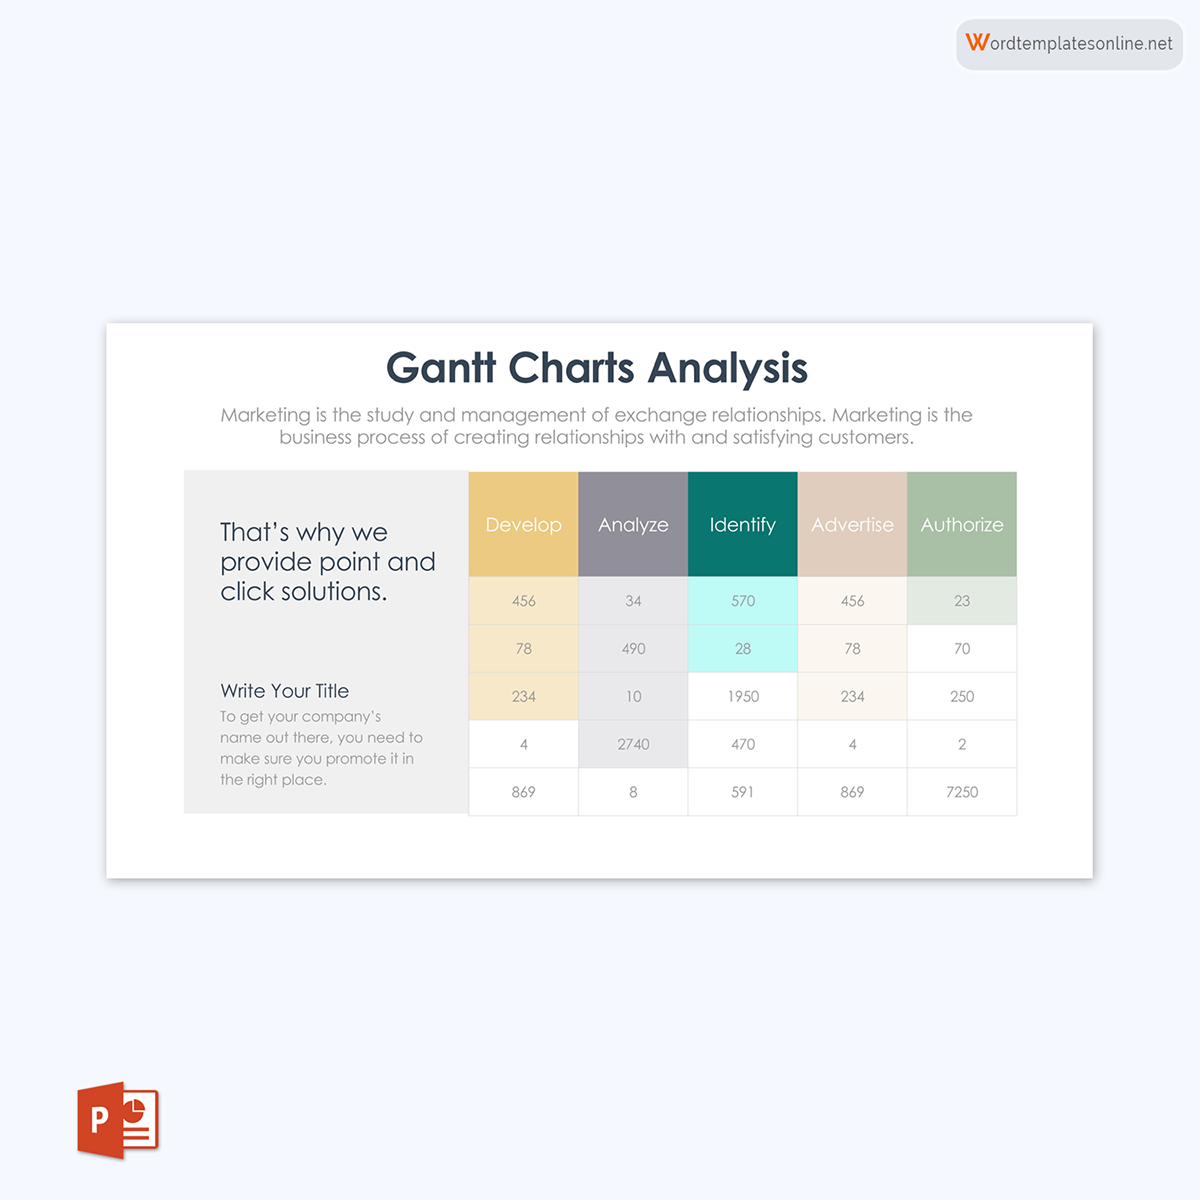 Professional Editable Gantt Chart Analysis Template 08 as PowerPoint Slides